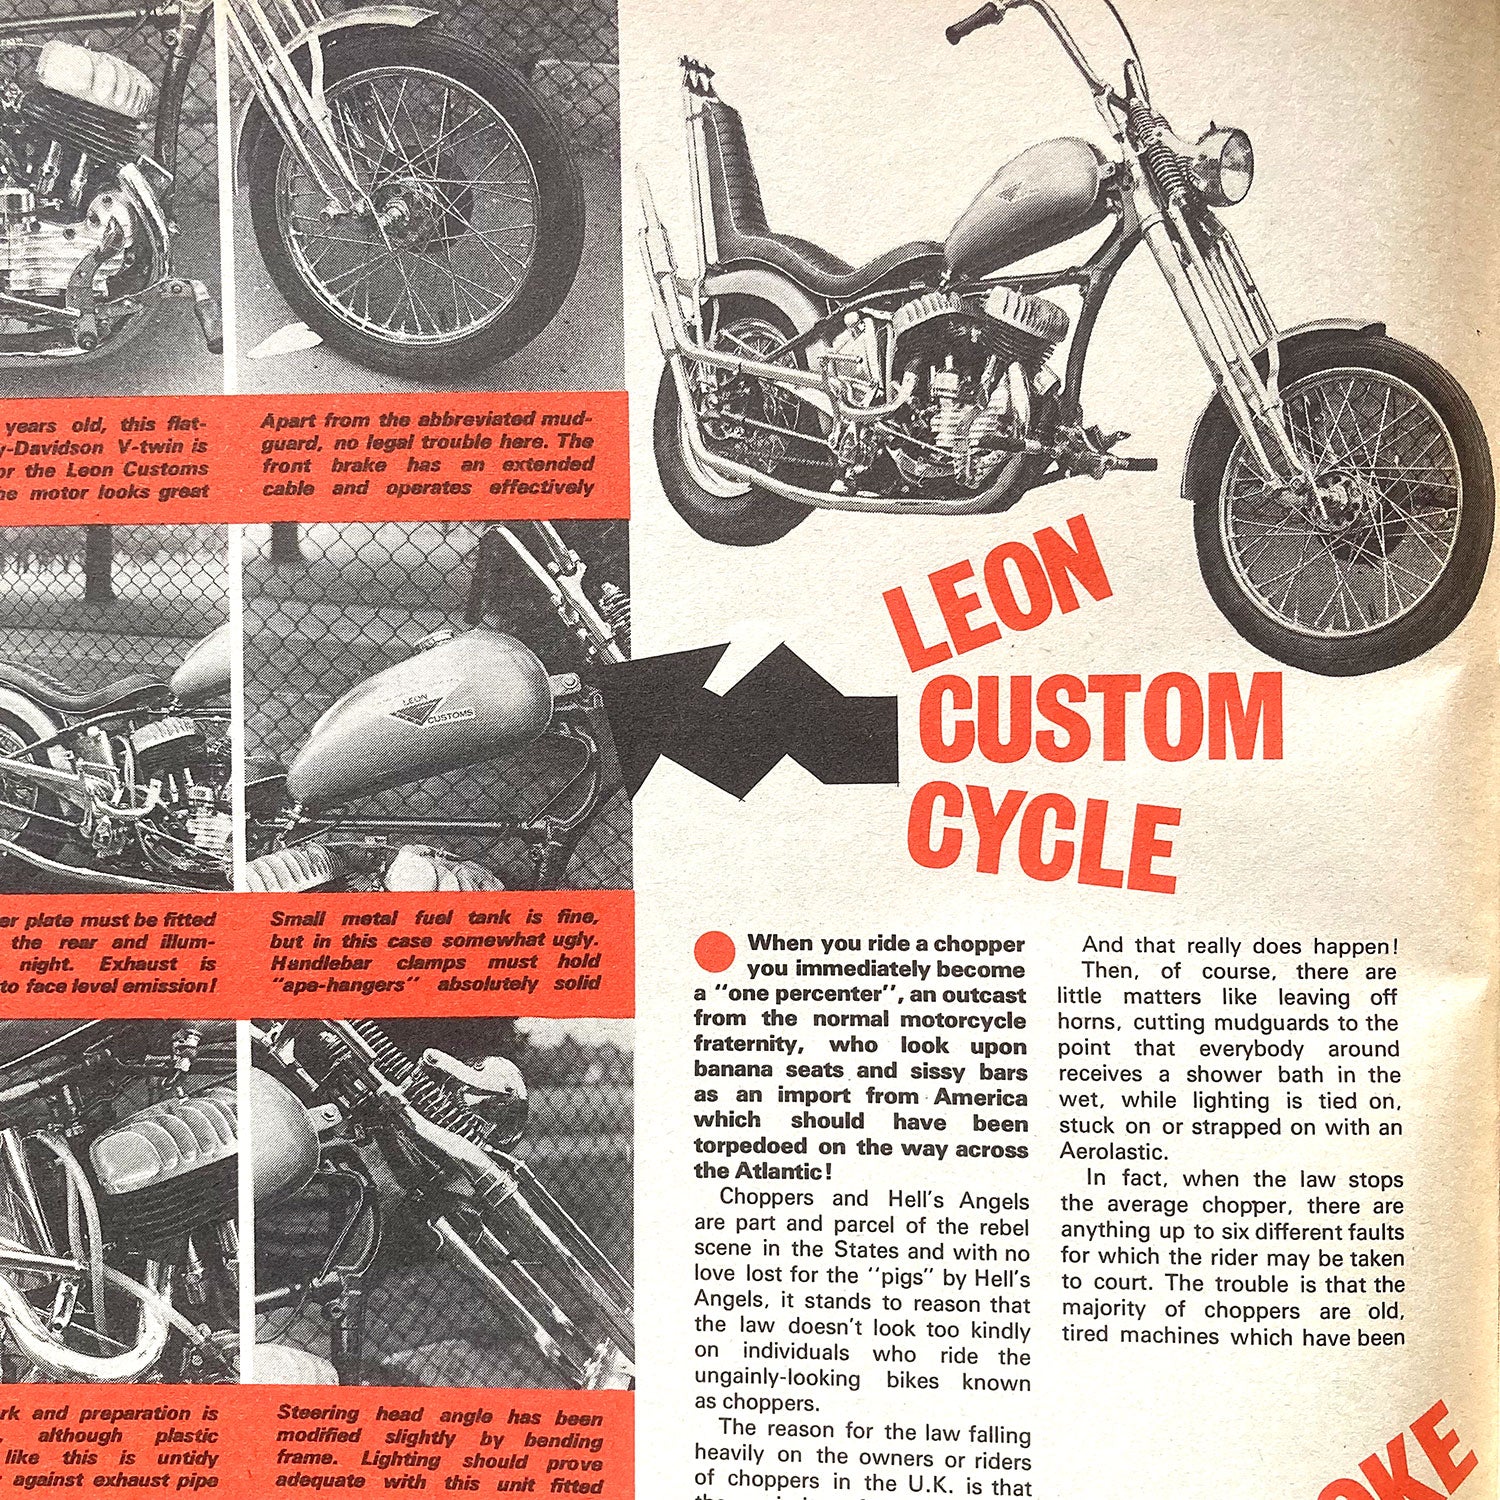 Motorcycle Mechanics magazine, September 1971